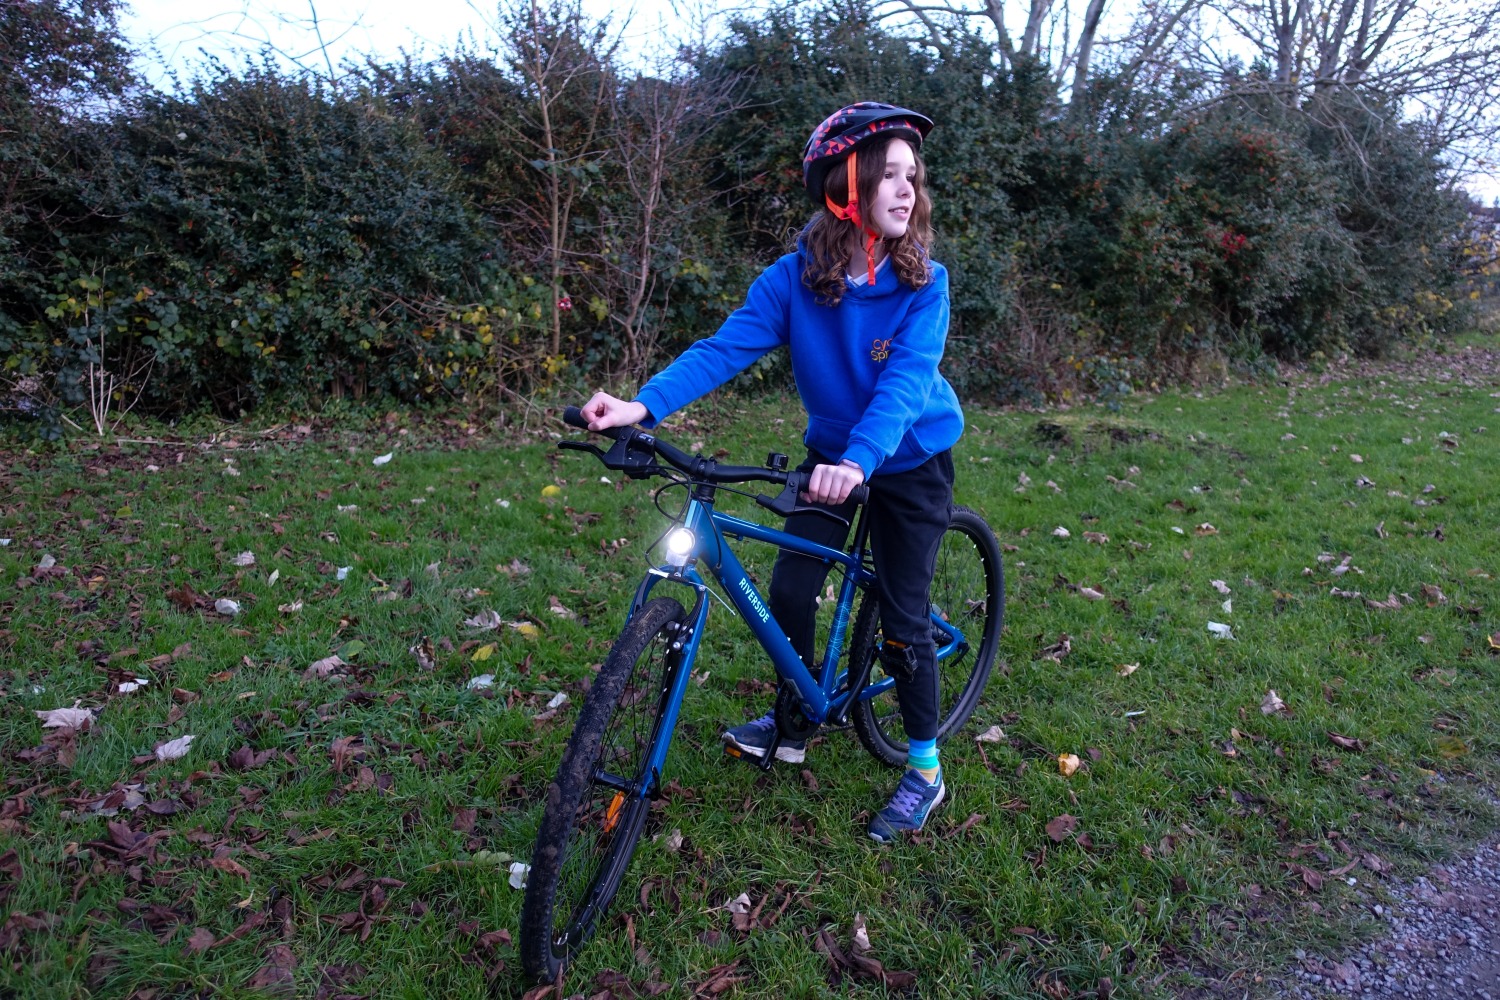 Best 26" mountain bikes for kids: a boy riding a mountain bike through long grass